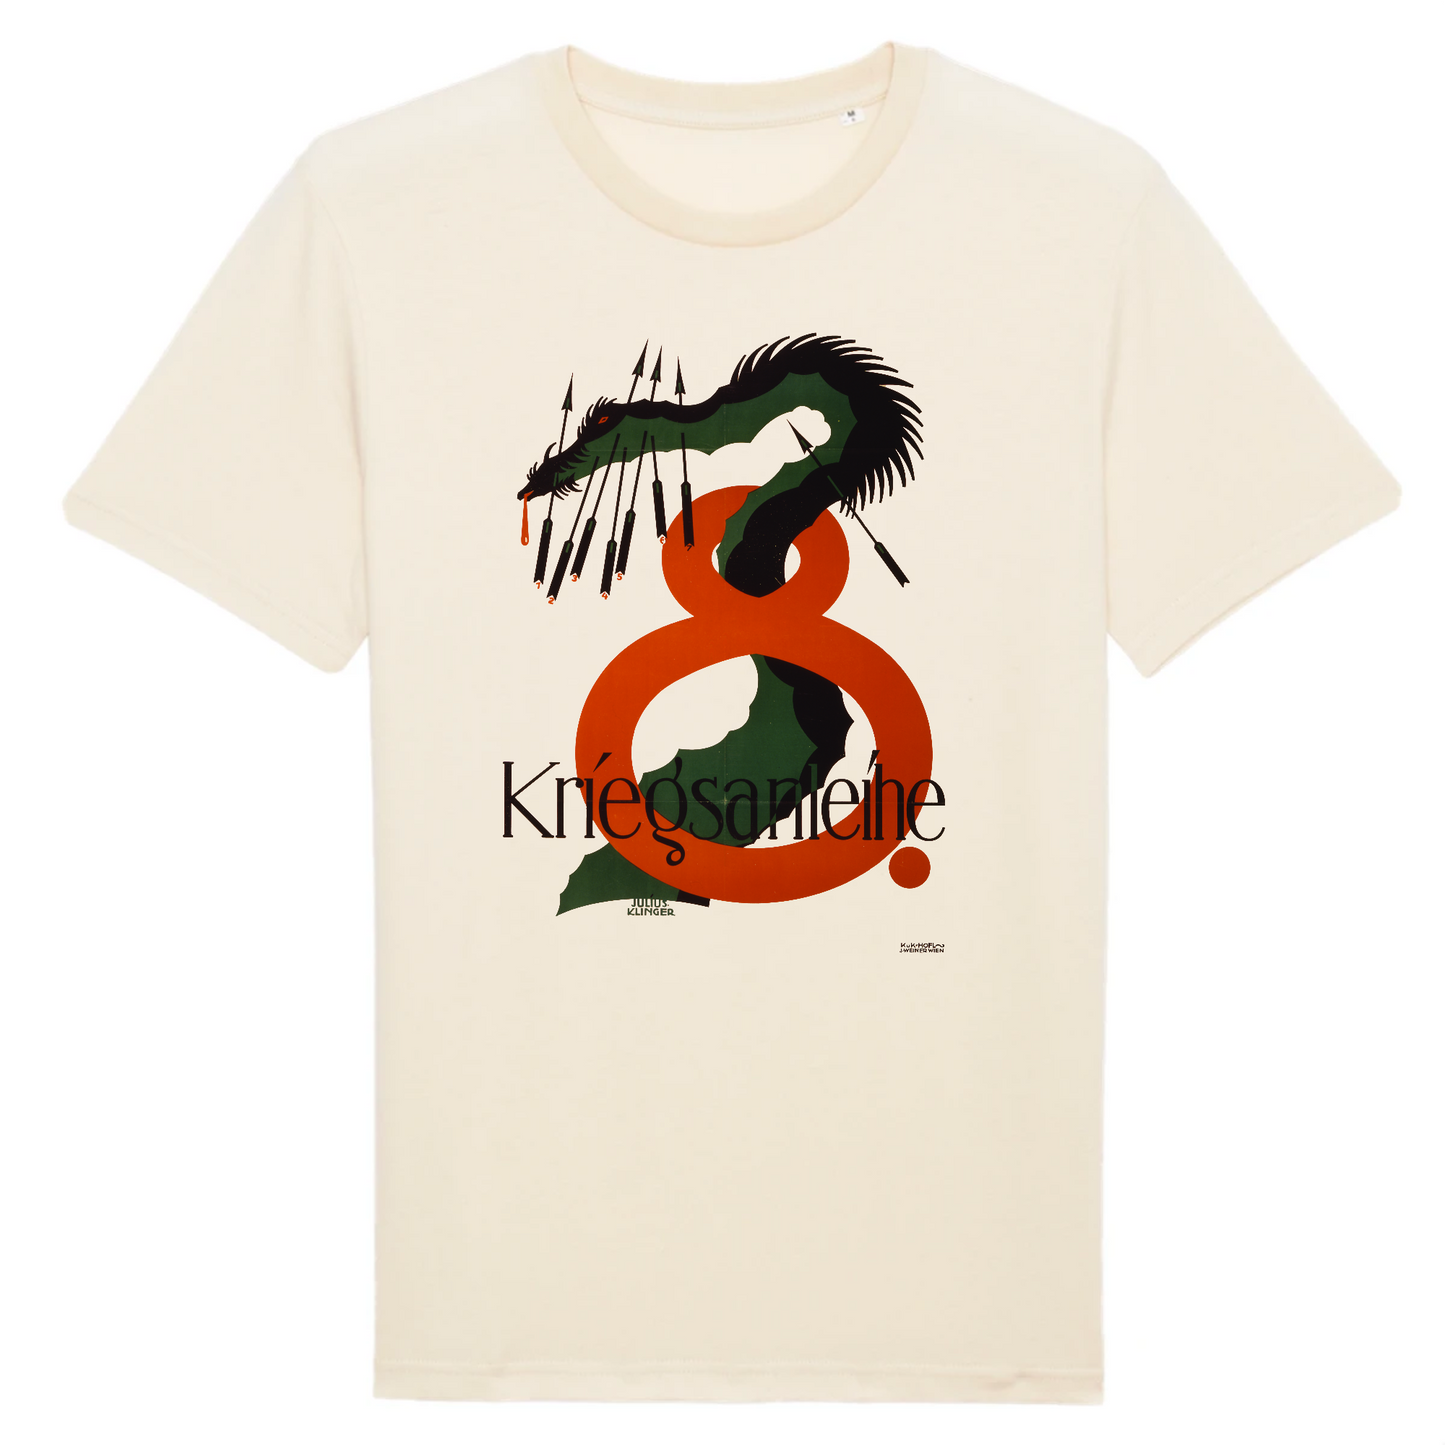 Kriegsanleihe by Julius Klinger, 1918 - Organic Cotton T-Shirt